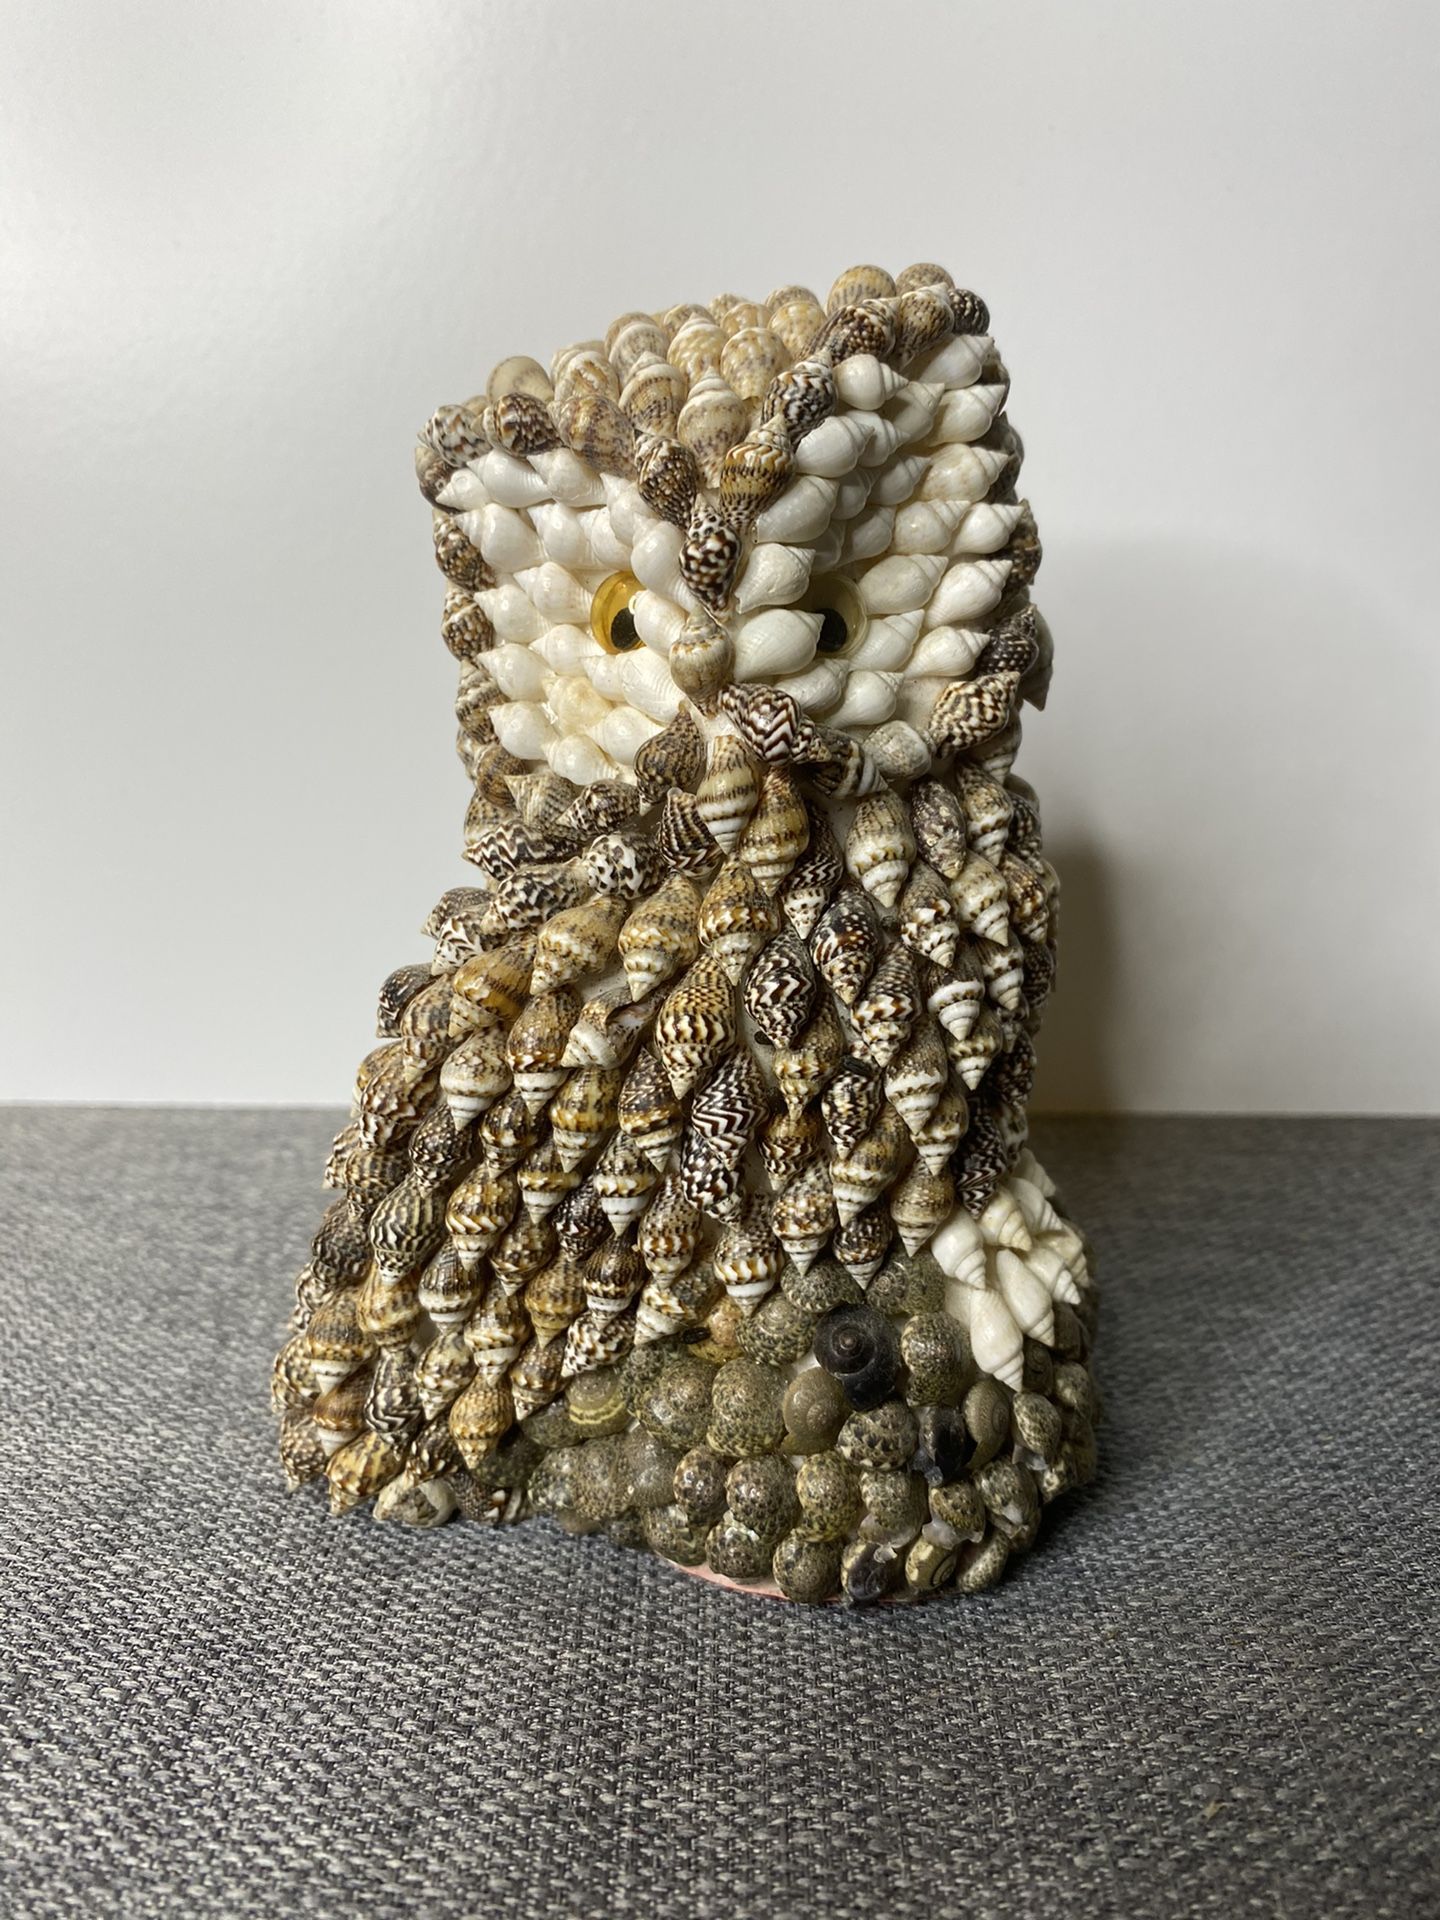 Vintage owl made with seashells